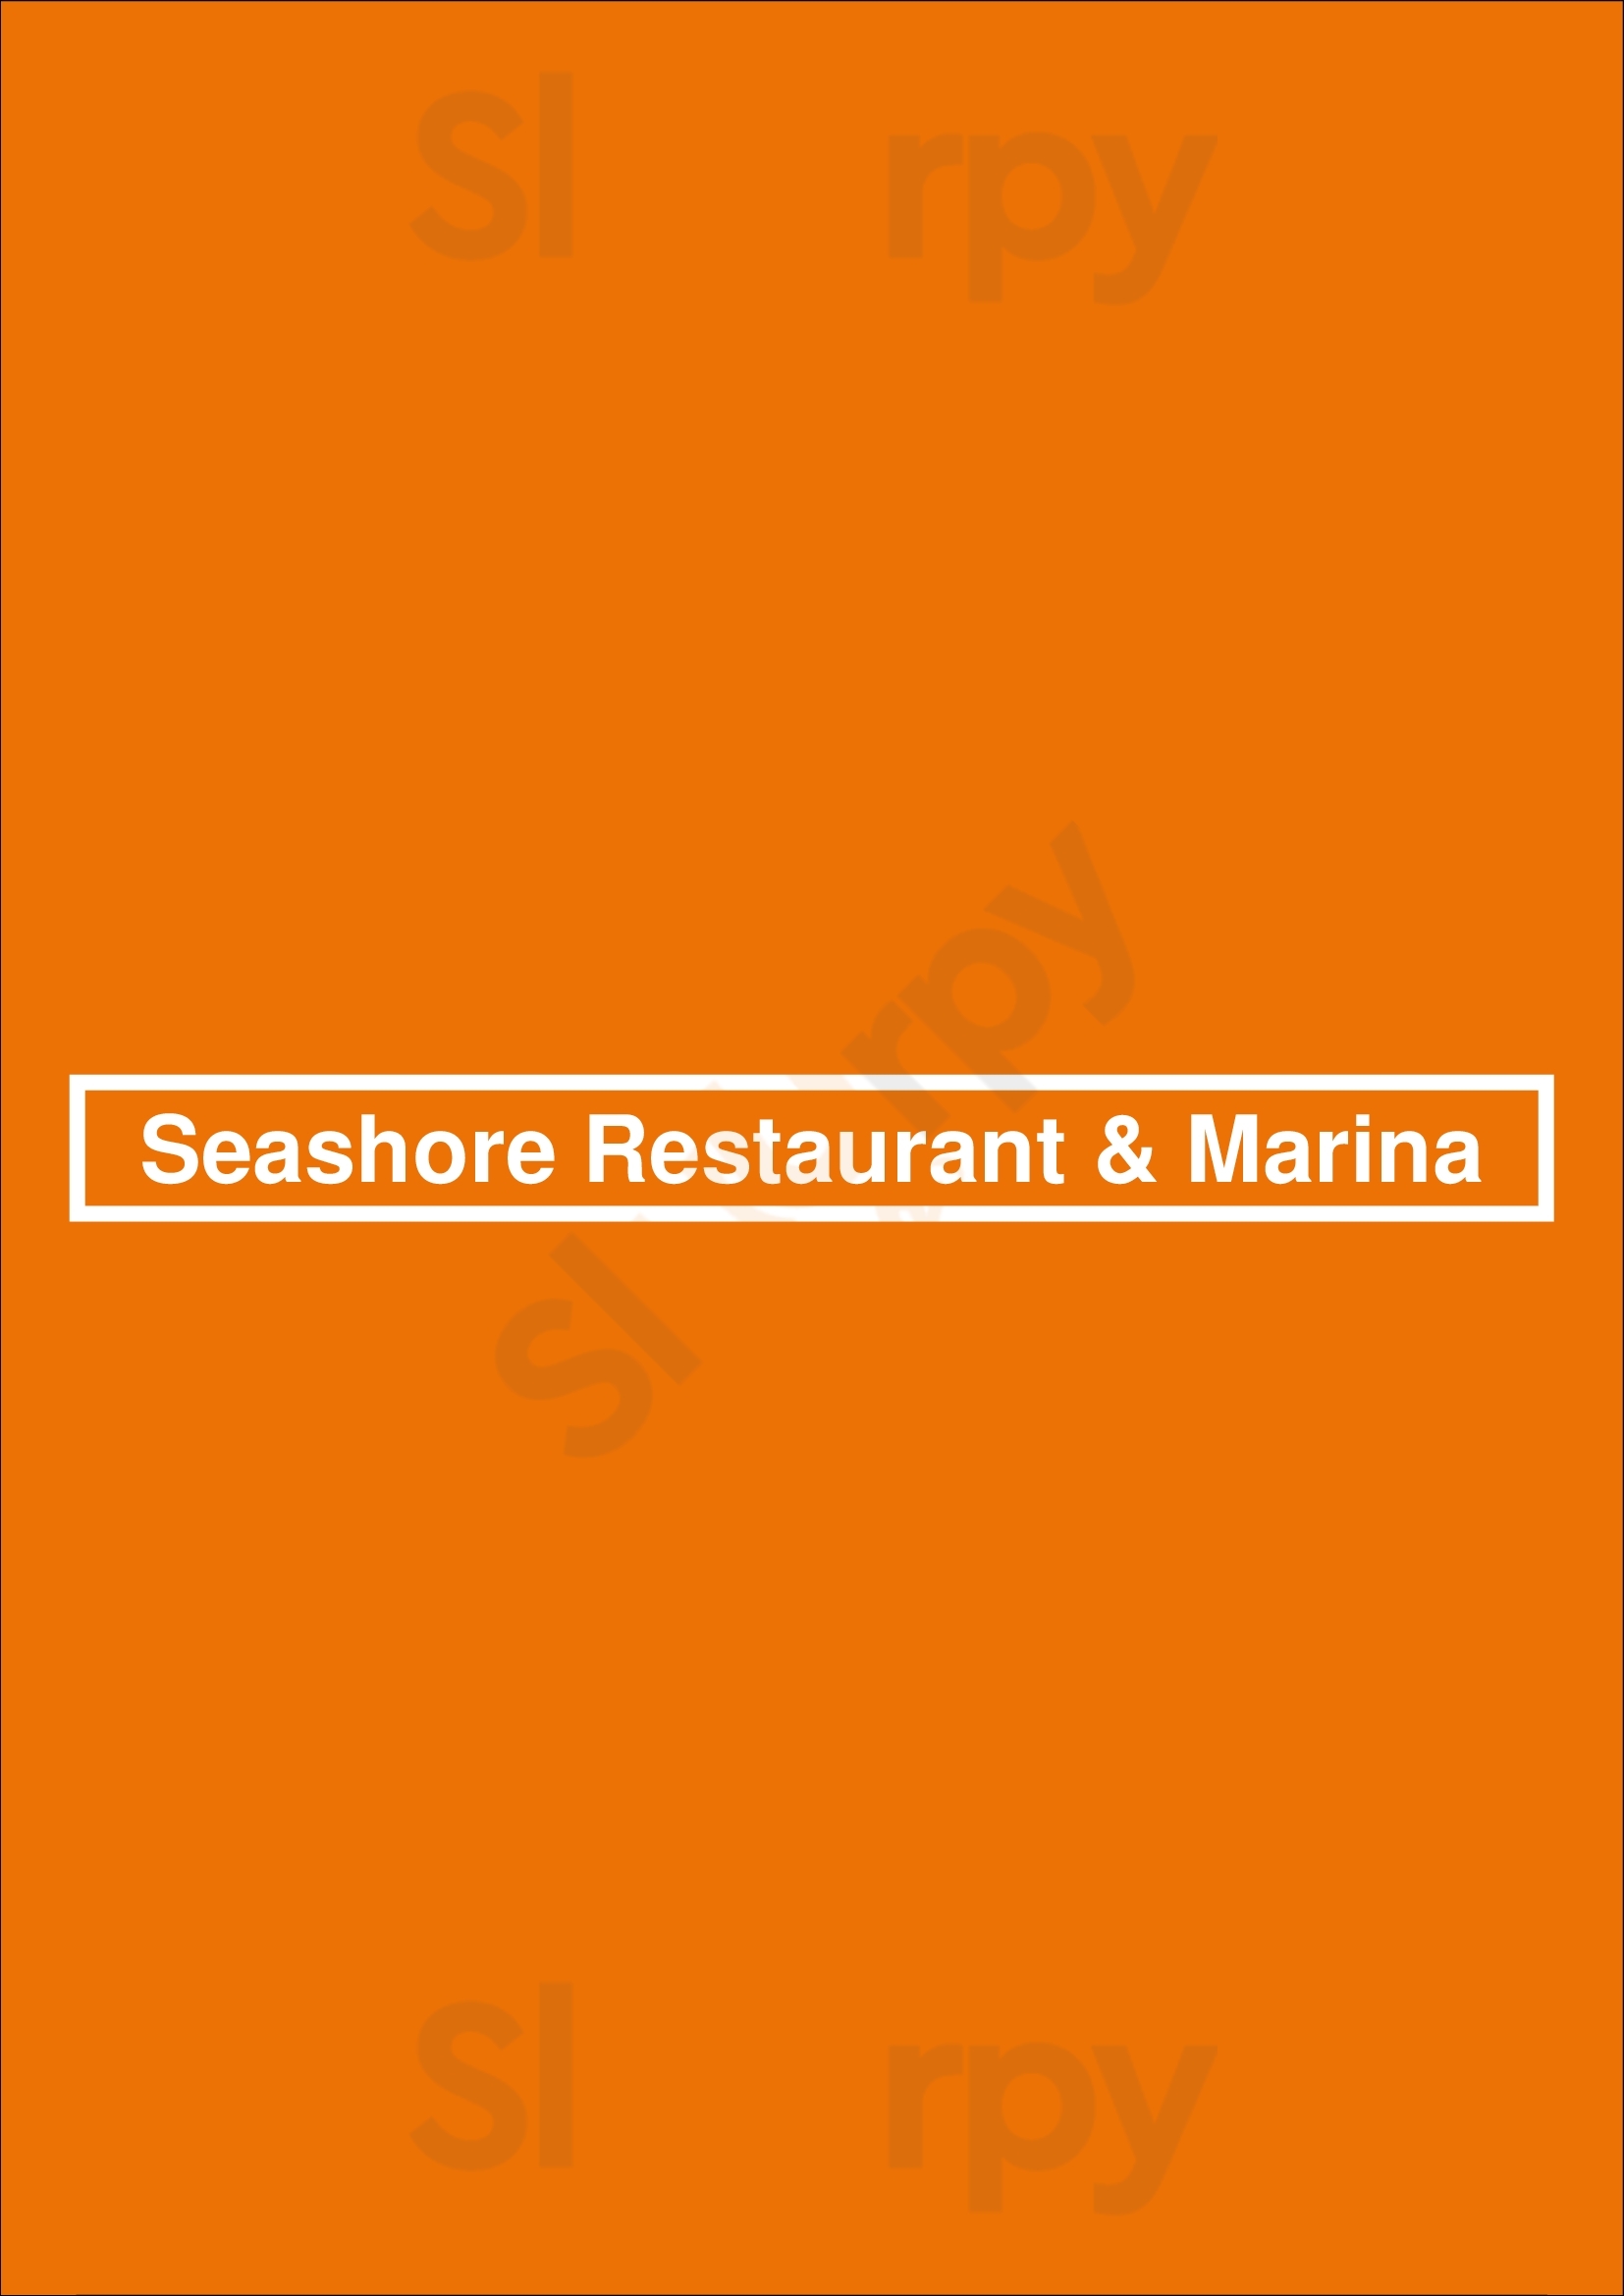 Seashore Restaurant & Marina Bronx Menu - 1